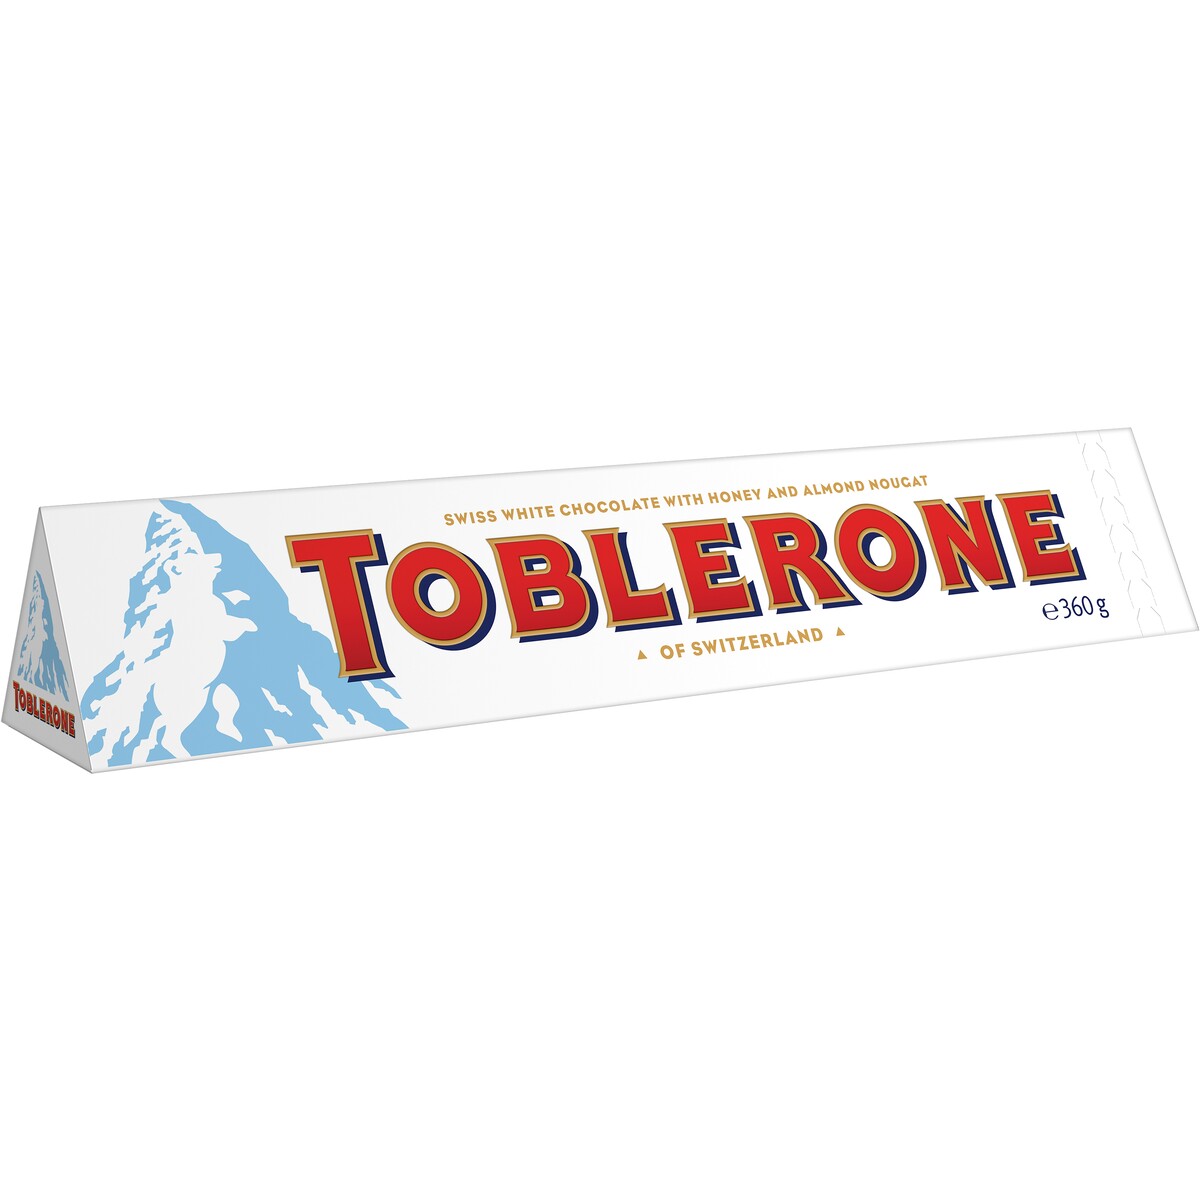 Toberlone White Chocolate Candy Bar